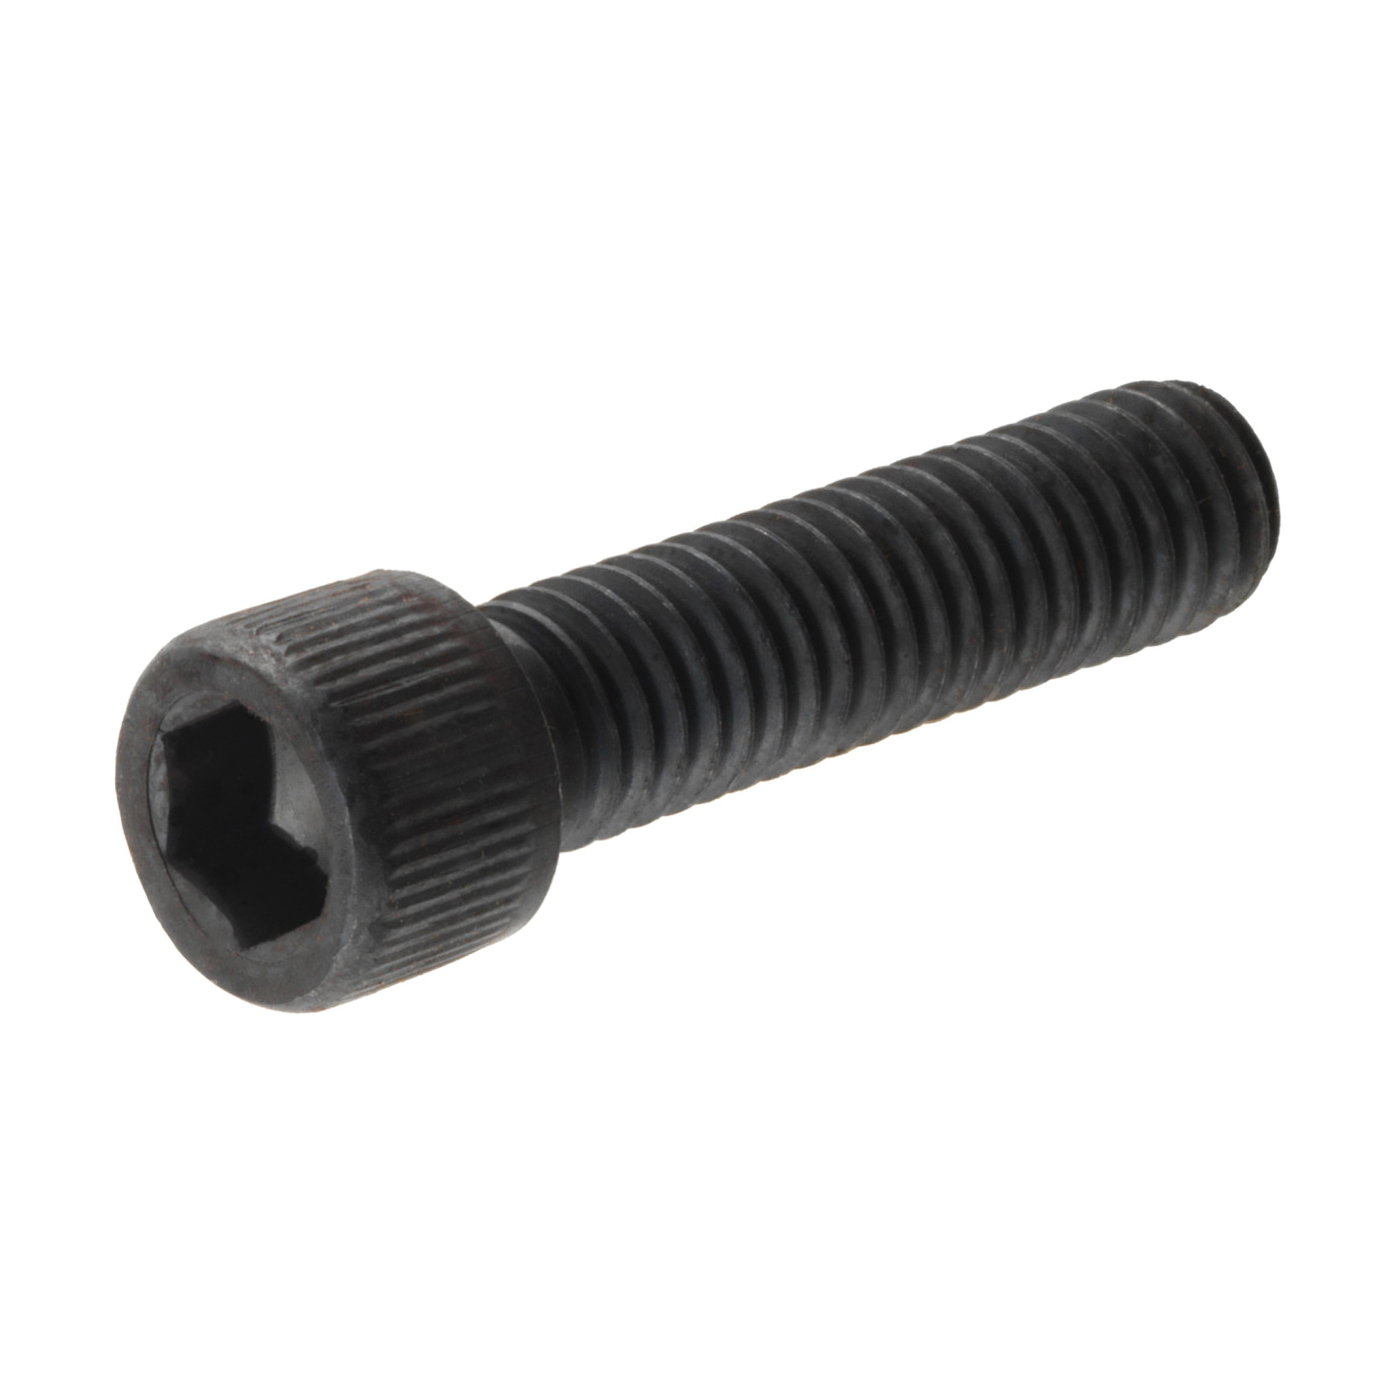 880329 Screw, 3/8-16 Thread, 3/4 in L, Coarse Thread, Socket Drive, Blunt Point, Steel, Black Phosphate, 2 PK